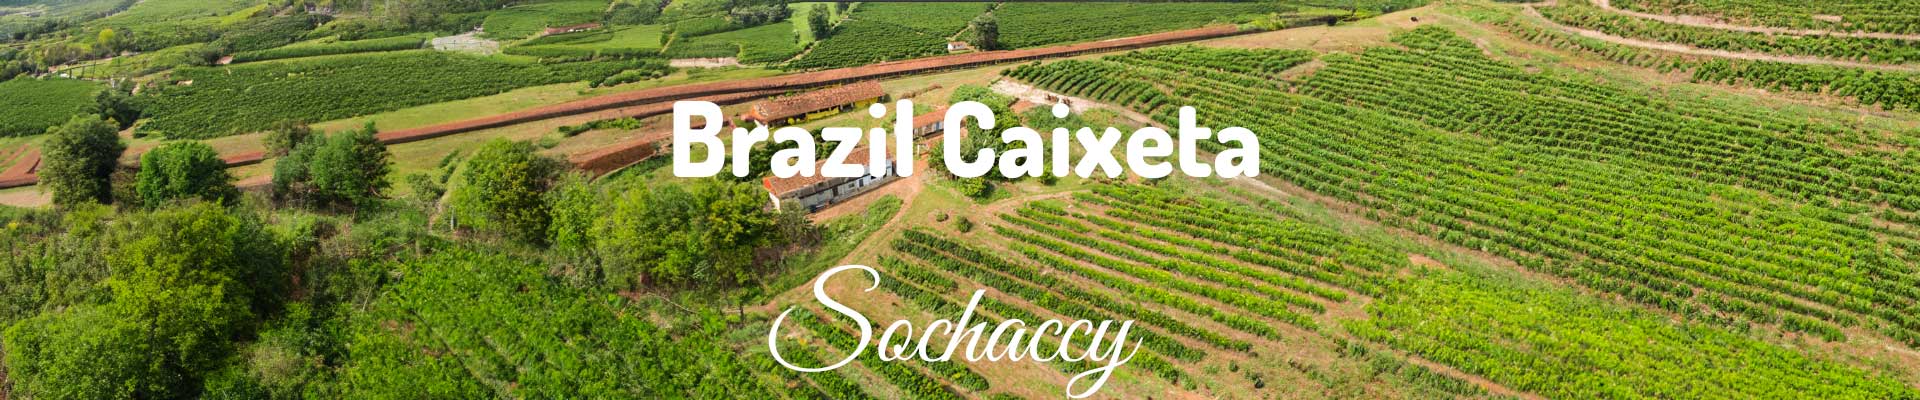 Brazylia Fazenda Caixeta